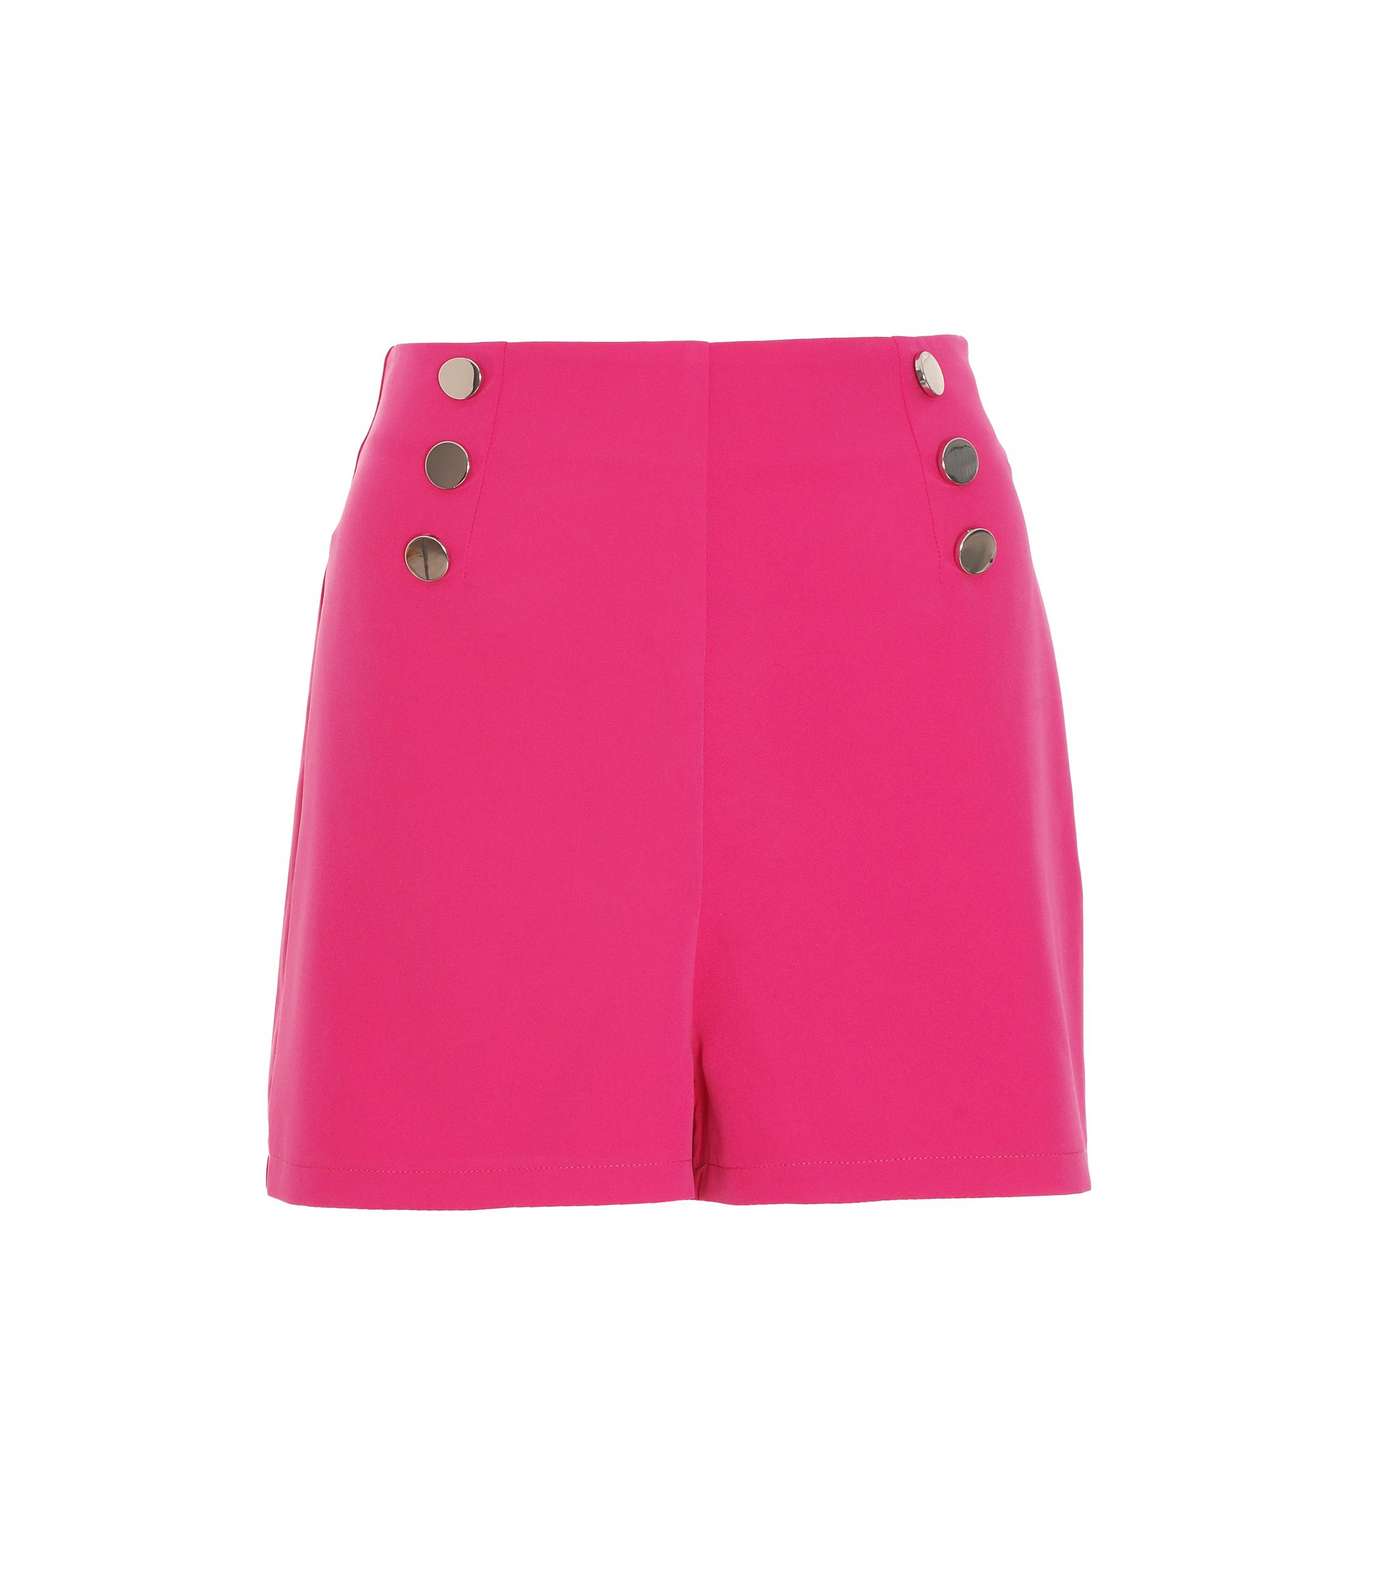 QUIZ Bright Pink High Waist Shorts Image 4